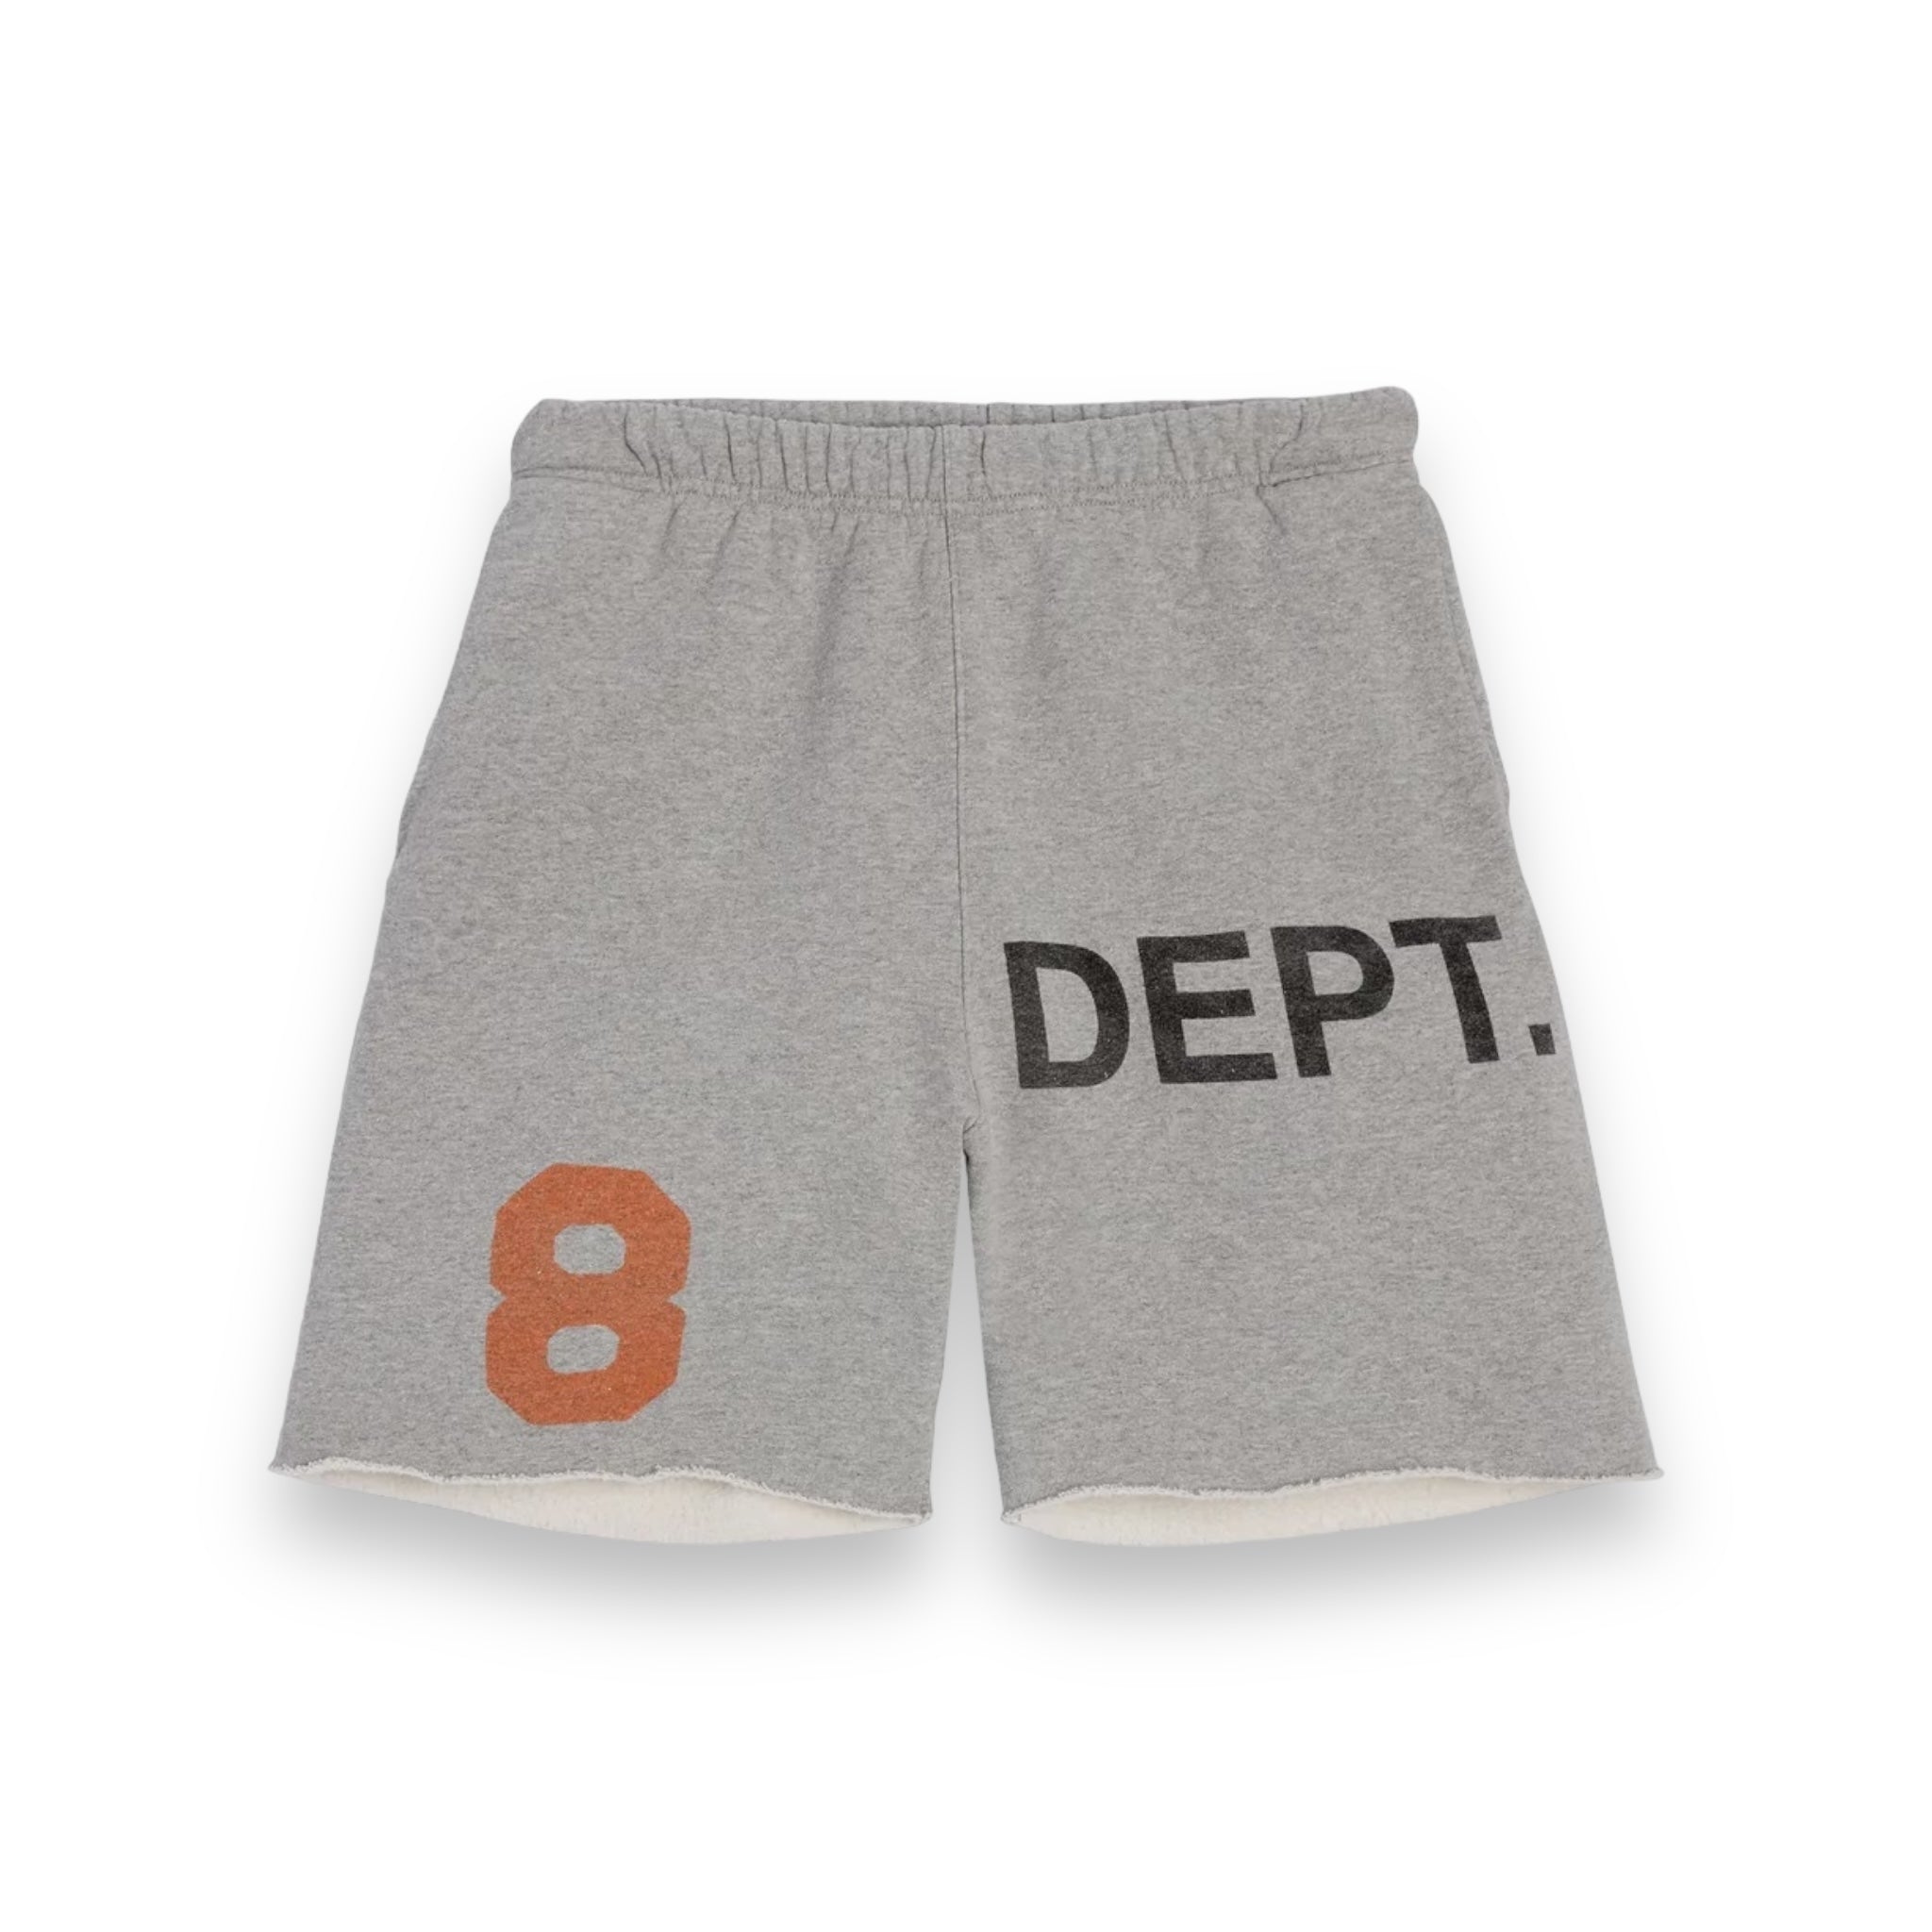 Gallery Dept "Dept" Logo Sweat Shorts Grey